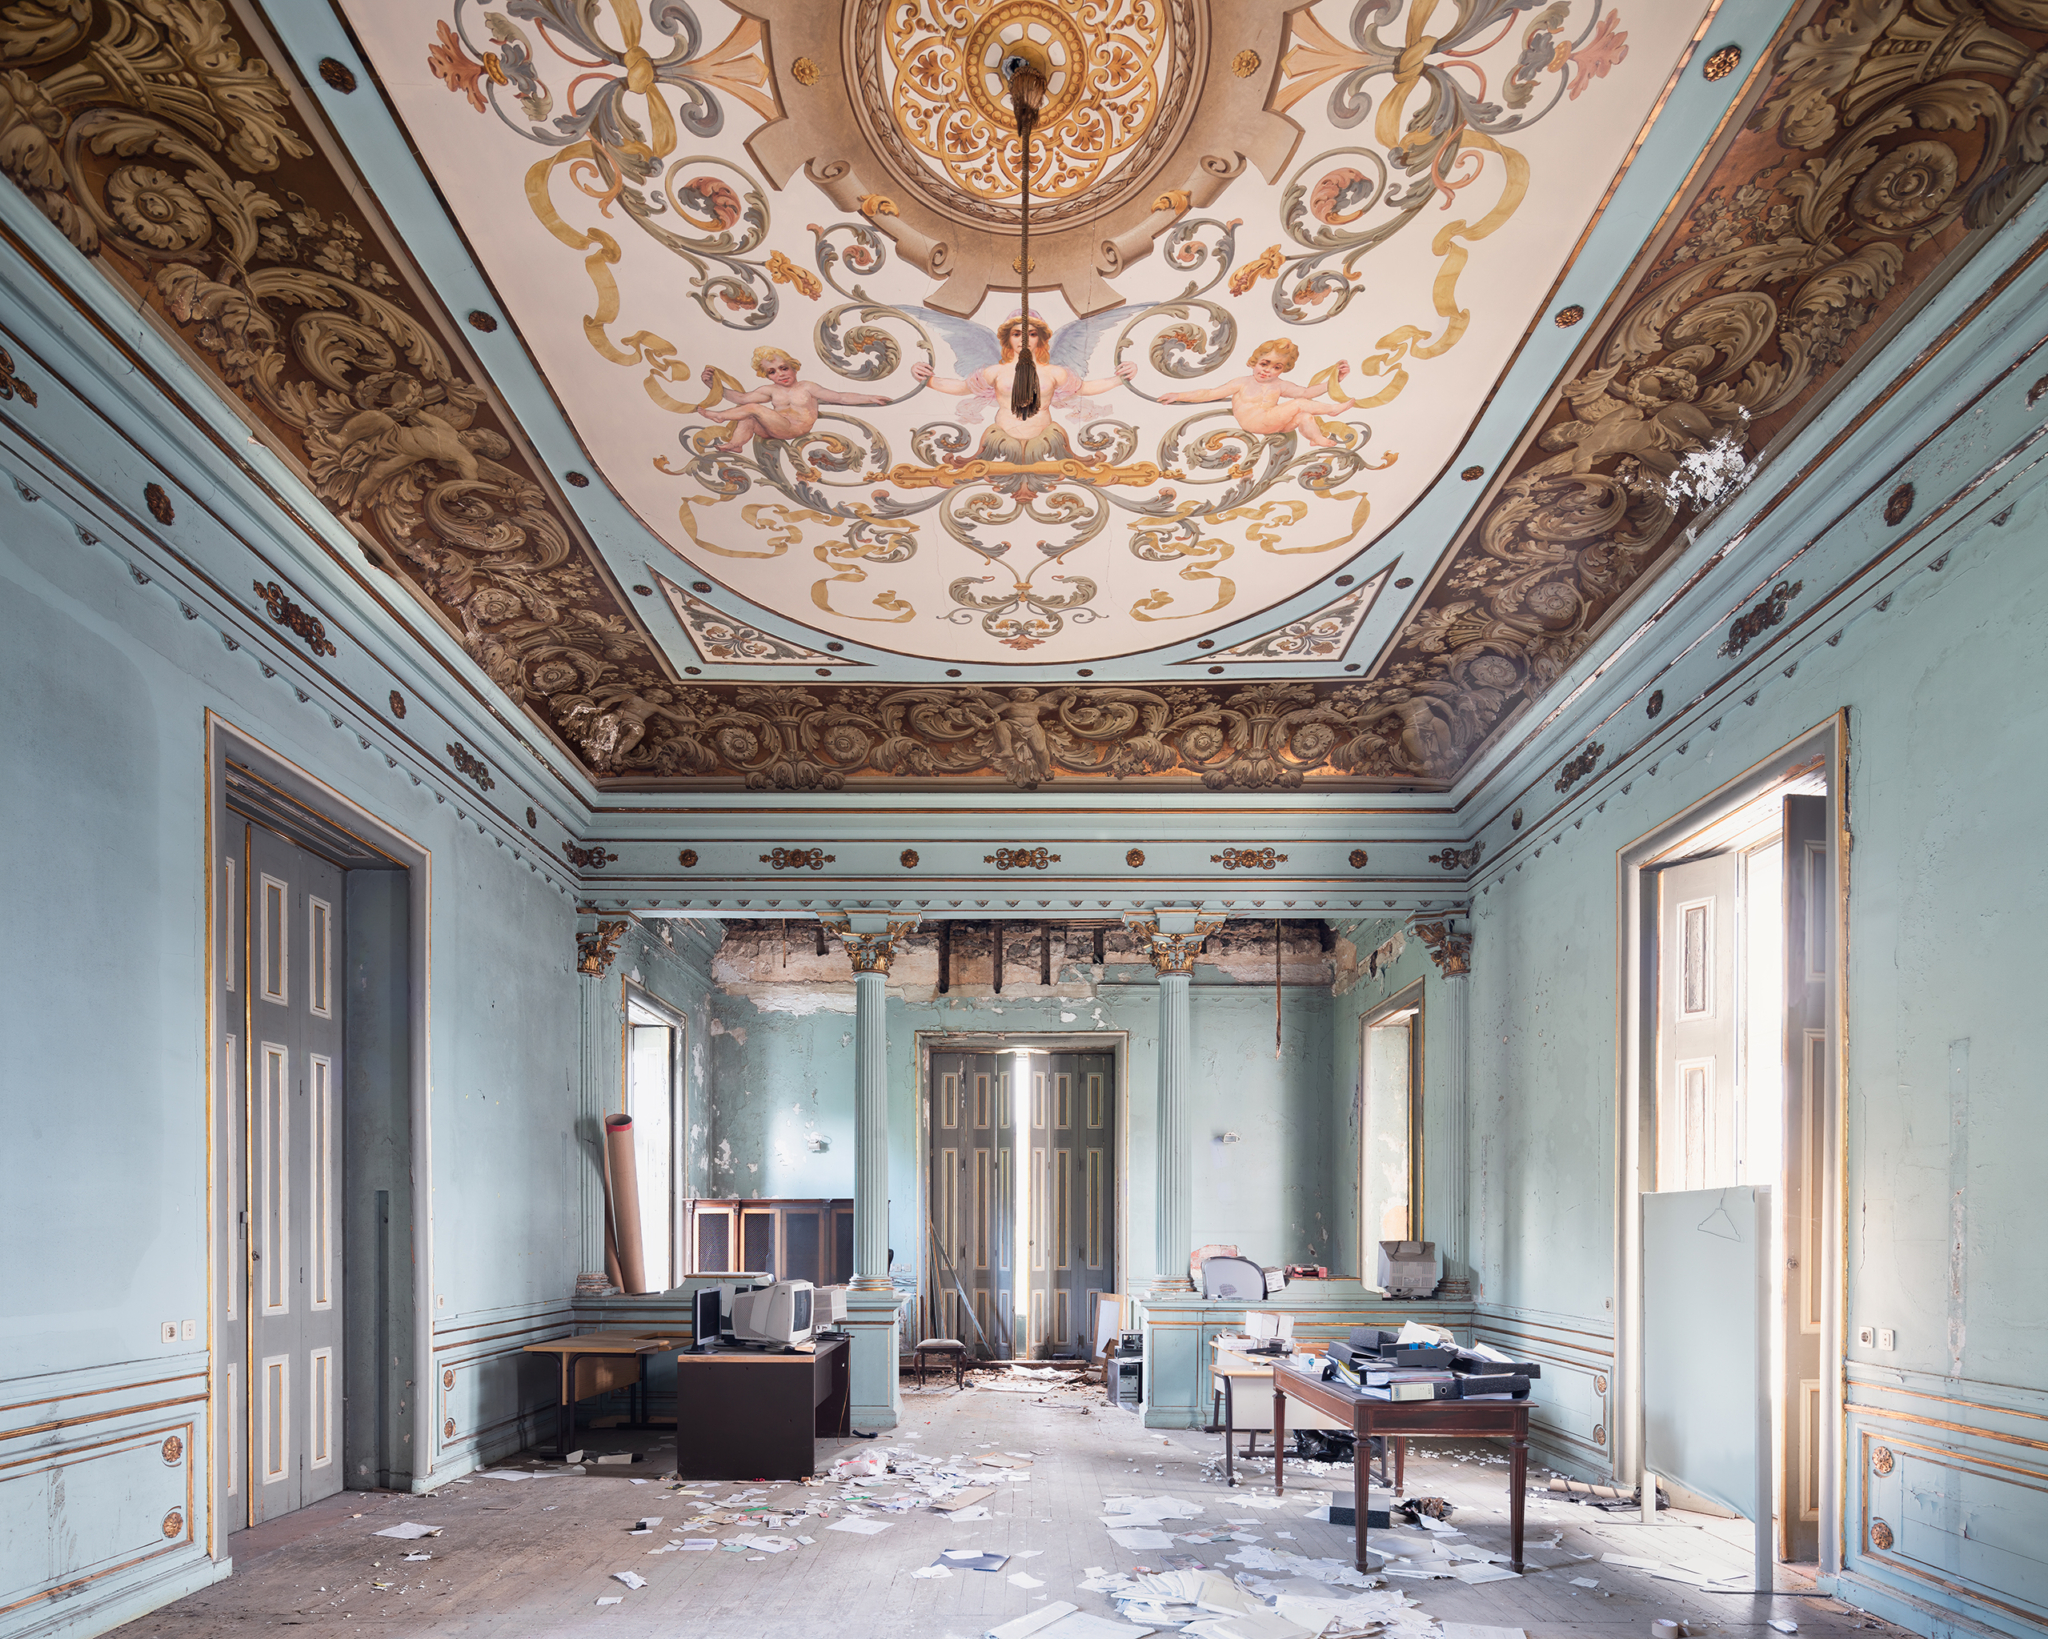 Mindset - Abandoned palace in portugal